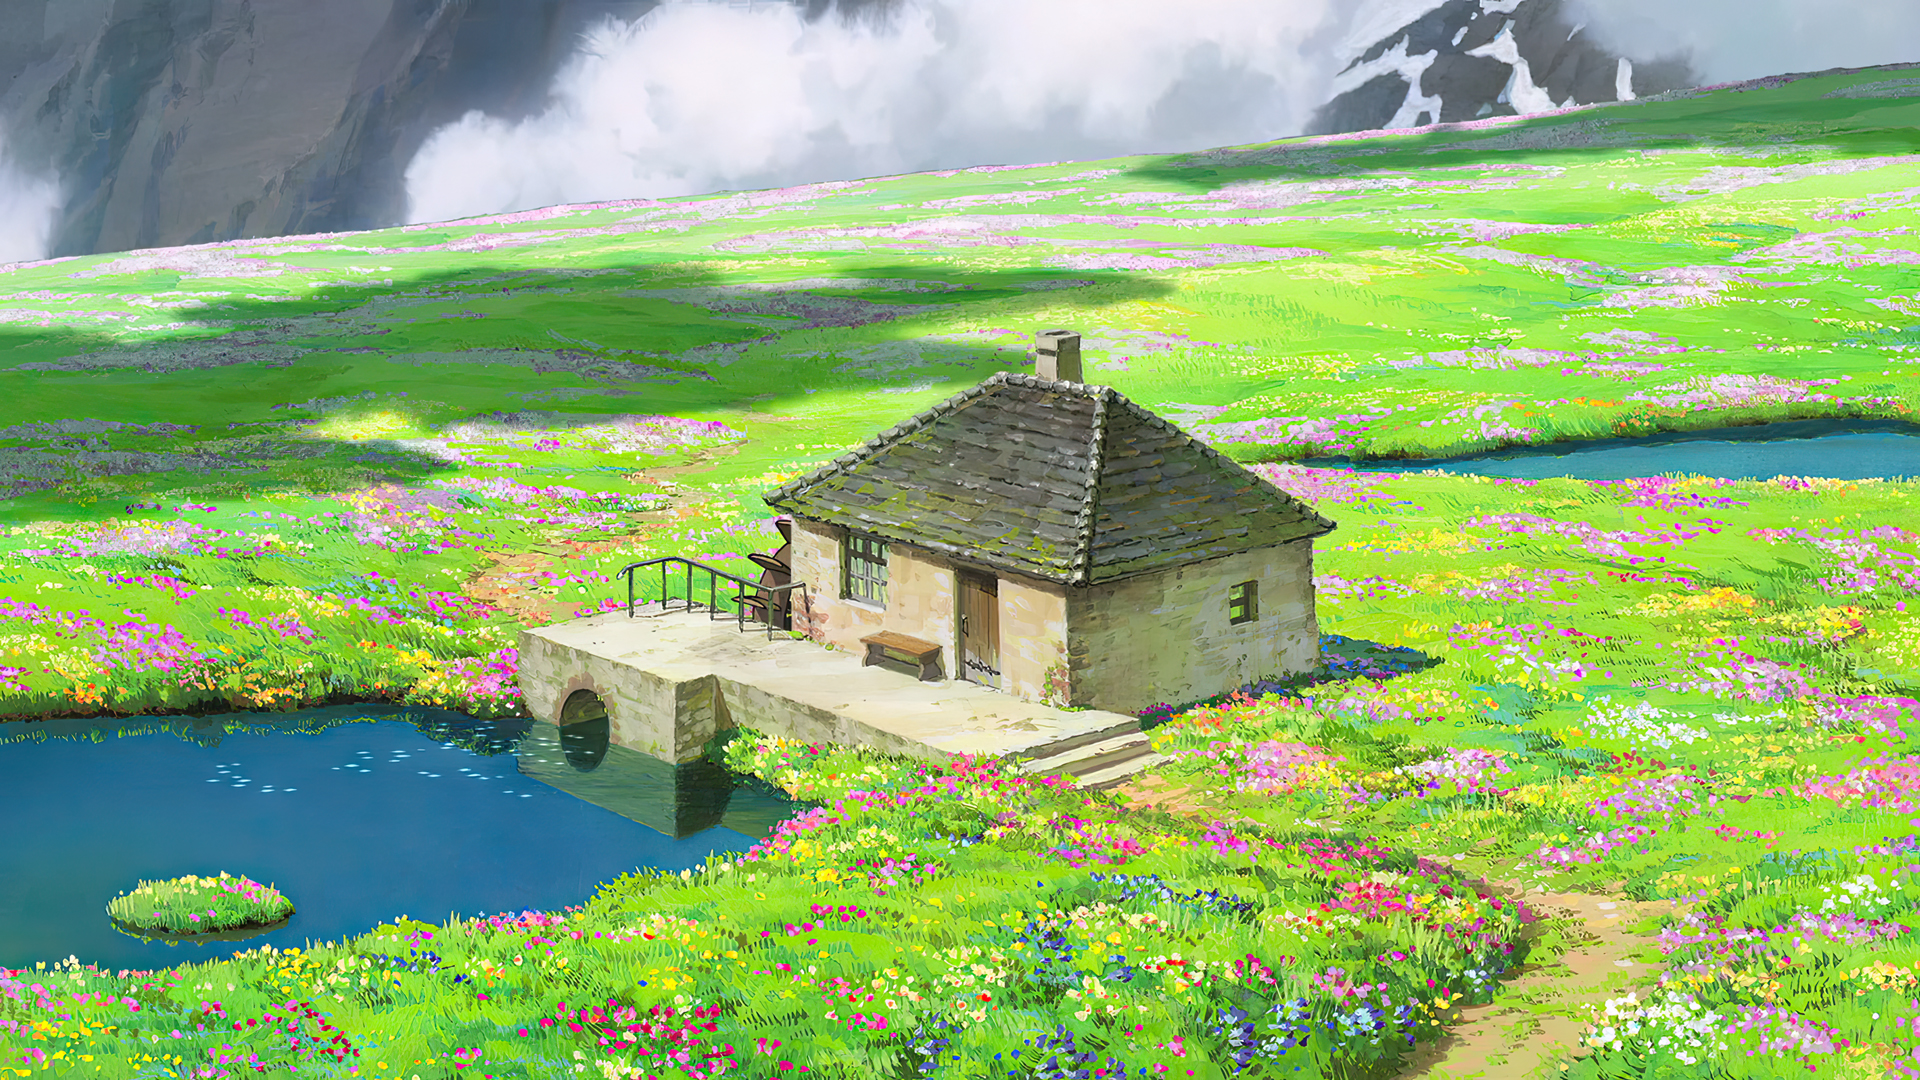 Howls Moving Castle Animated Movies Anime Animation Studio Ghibli Hayao Miyazaki House Field Flowers 1920x1080